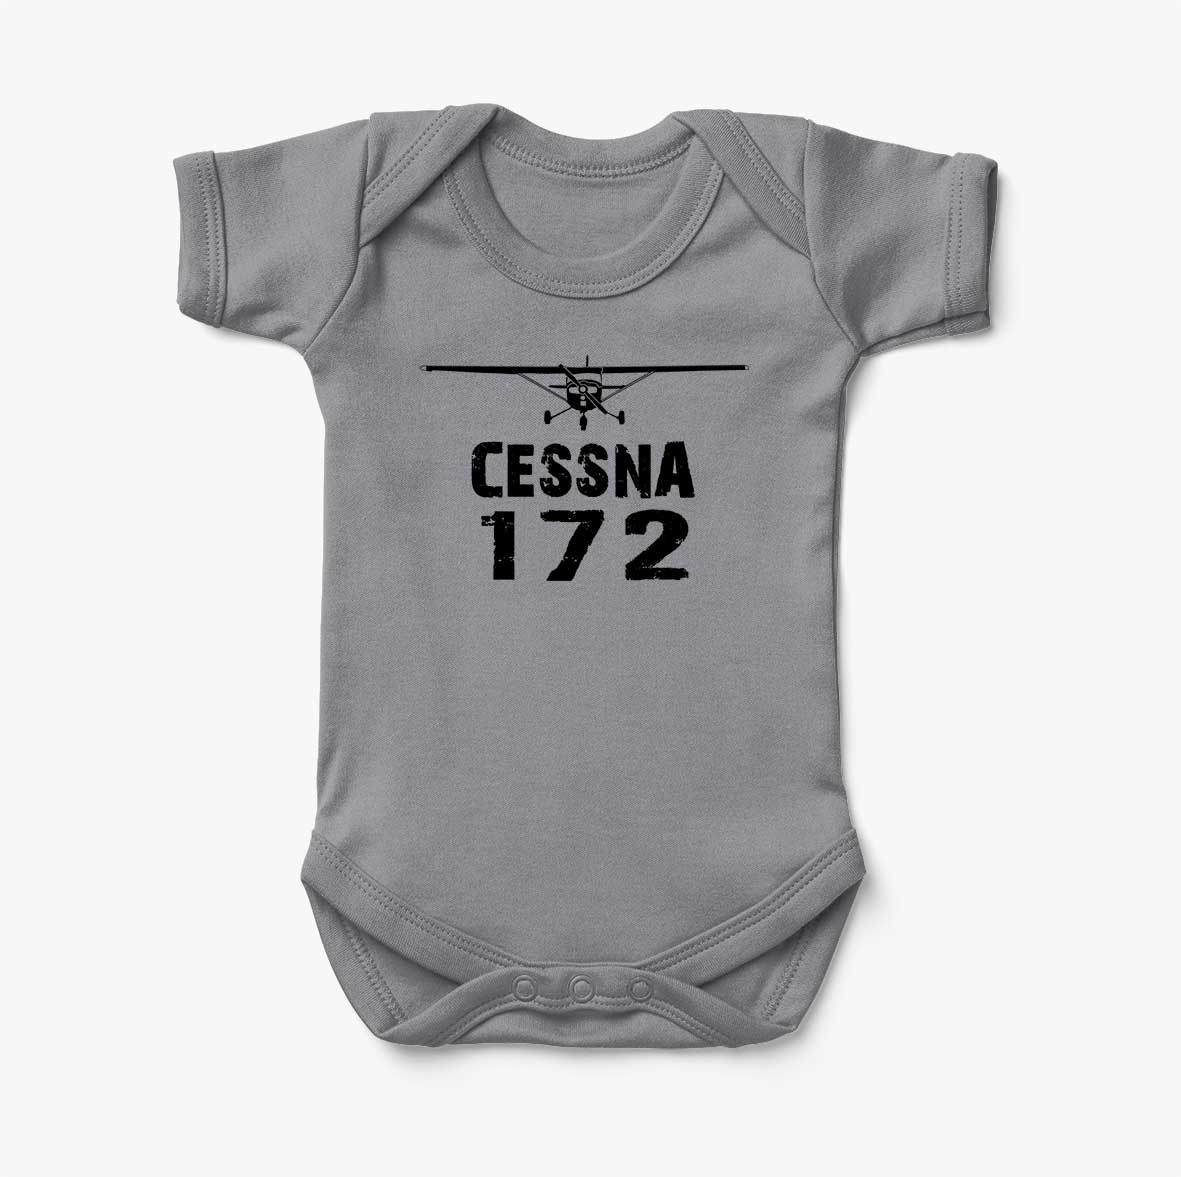 Cessna 172 & Plane Designed Baby Bodysuits